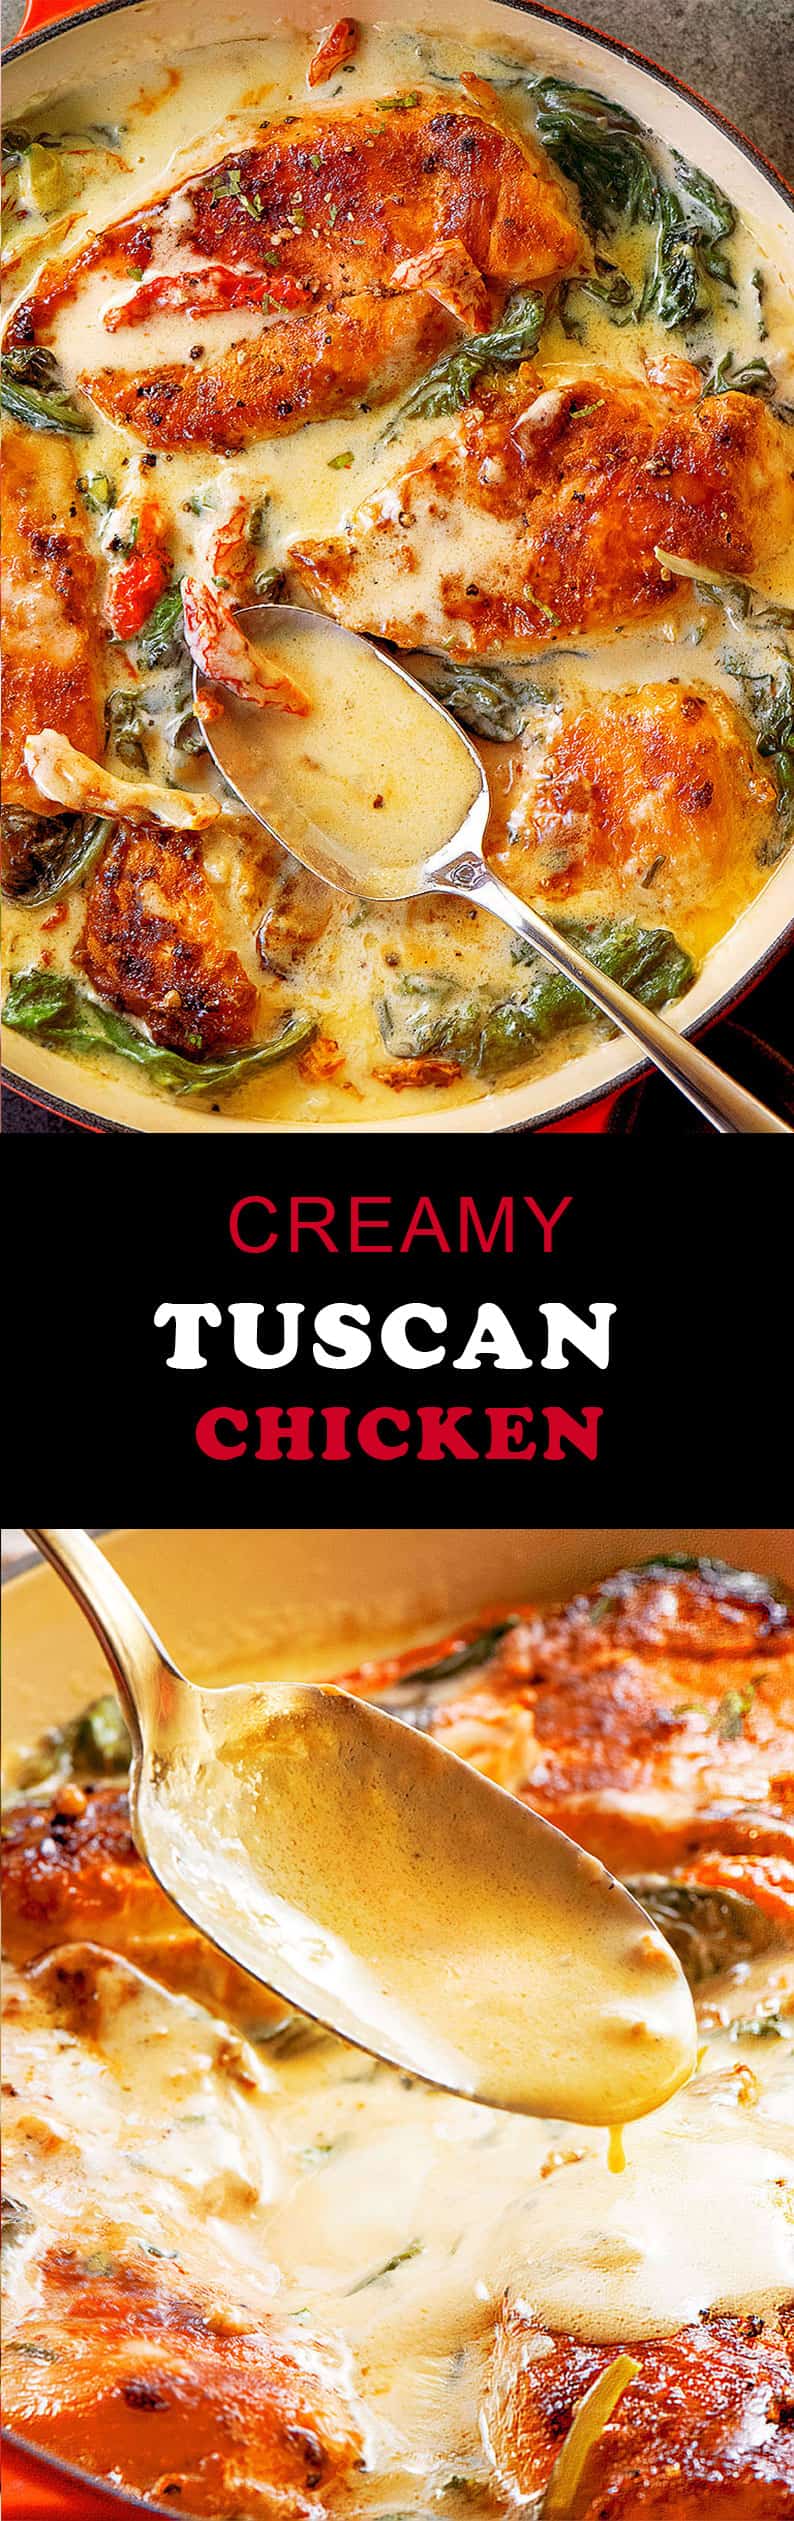 creamy-tuscan-chicken